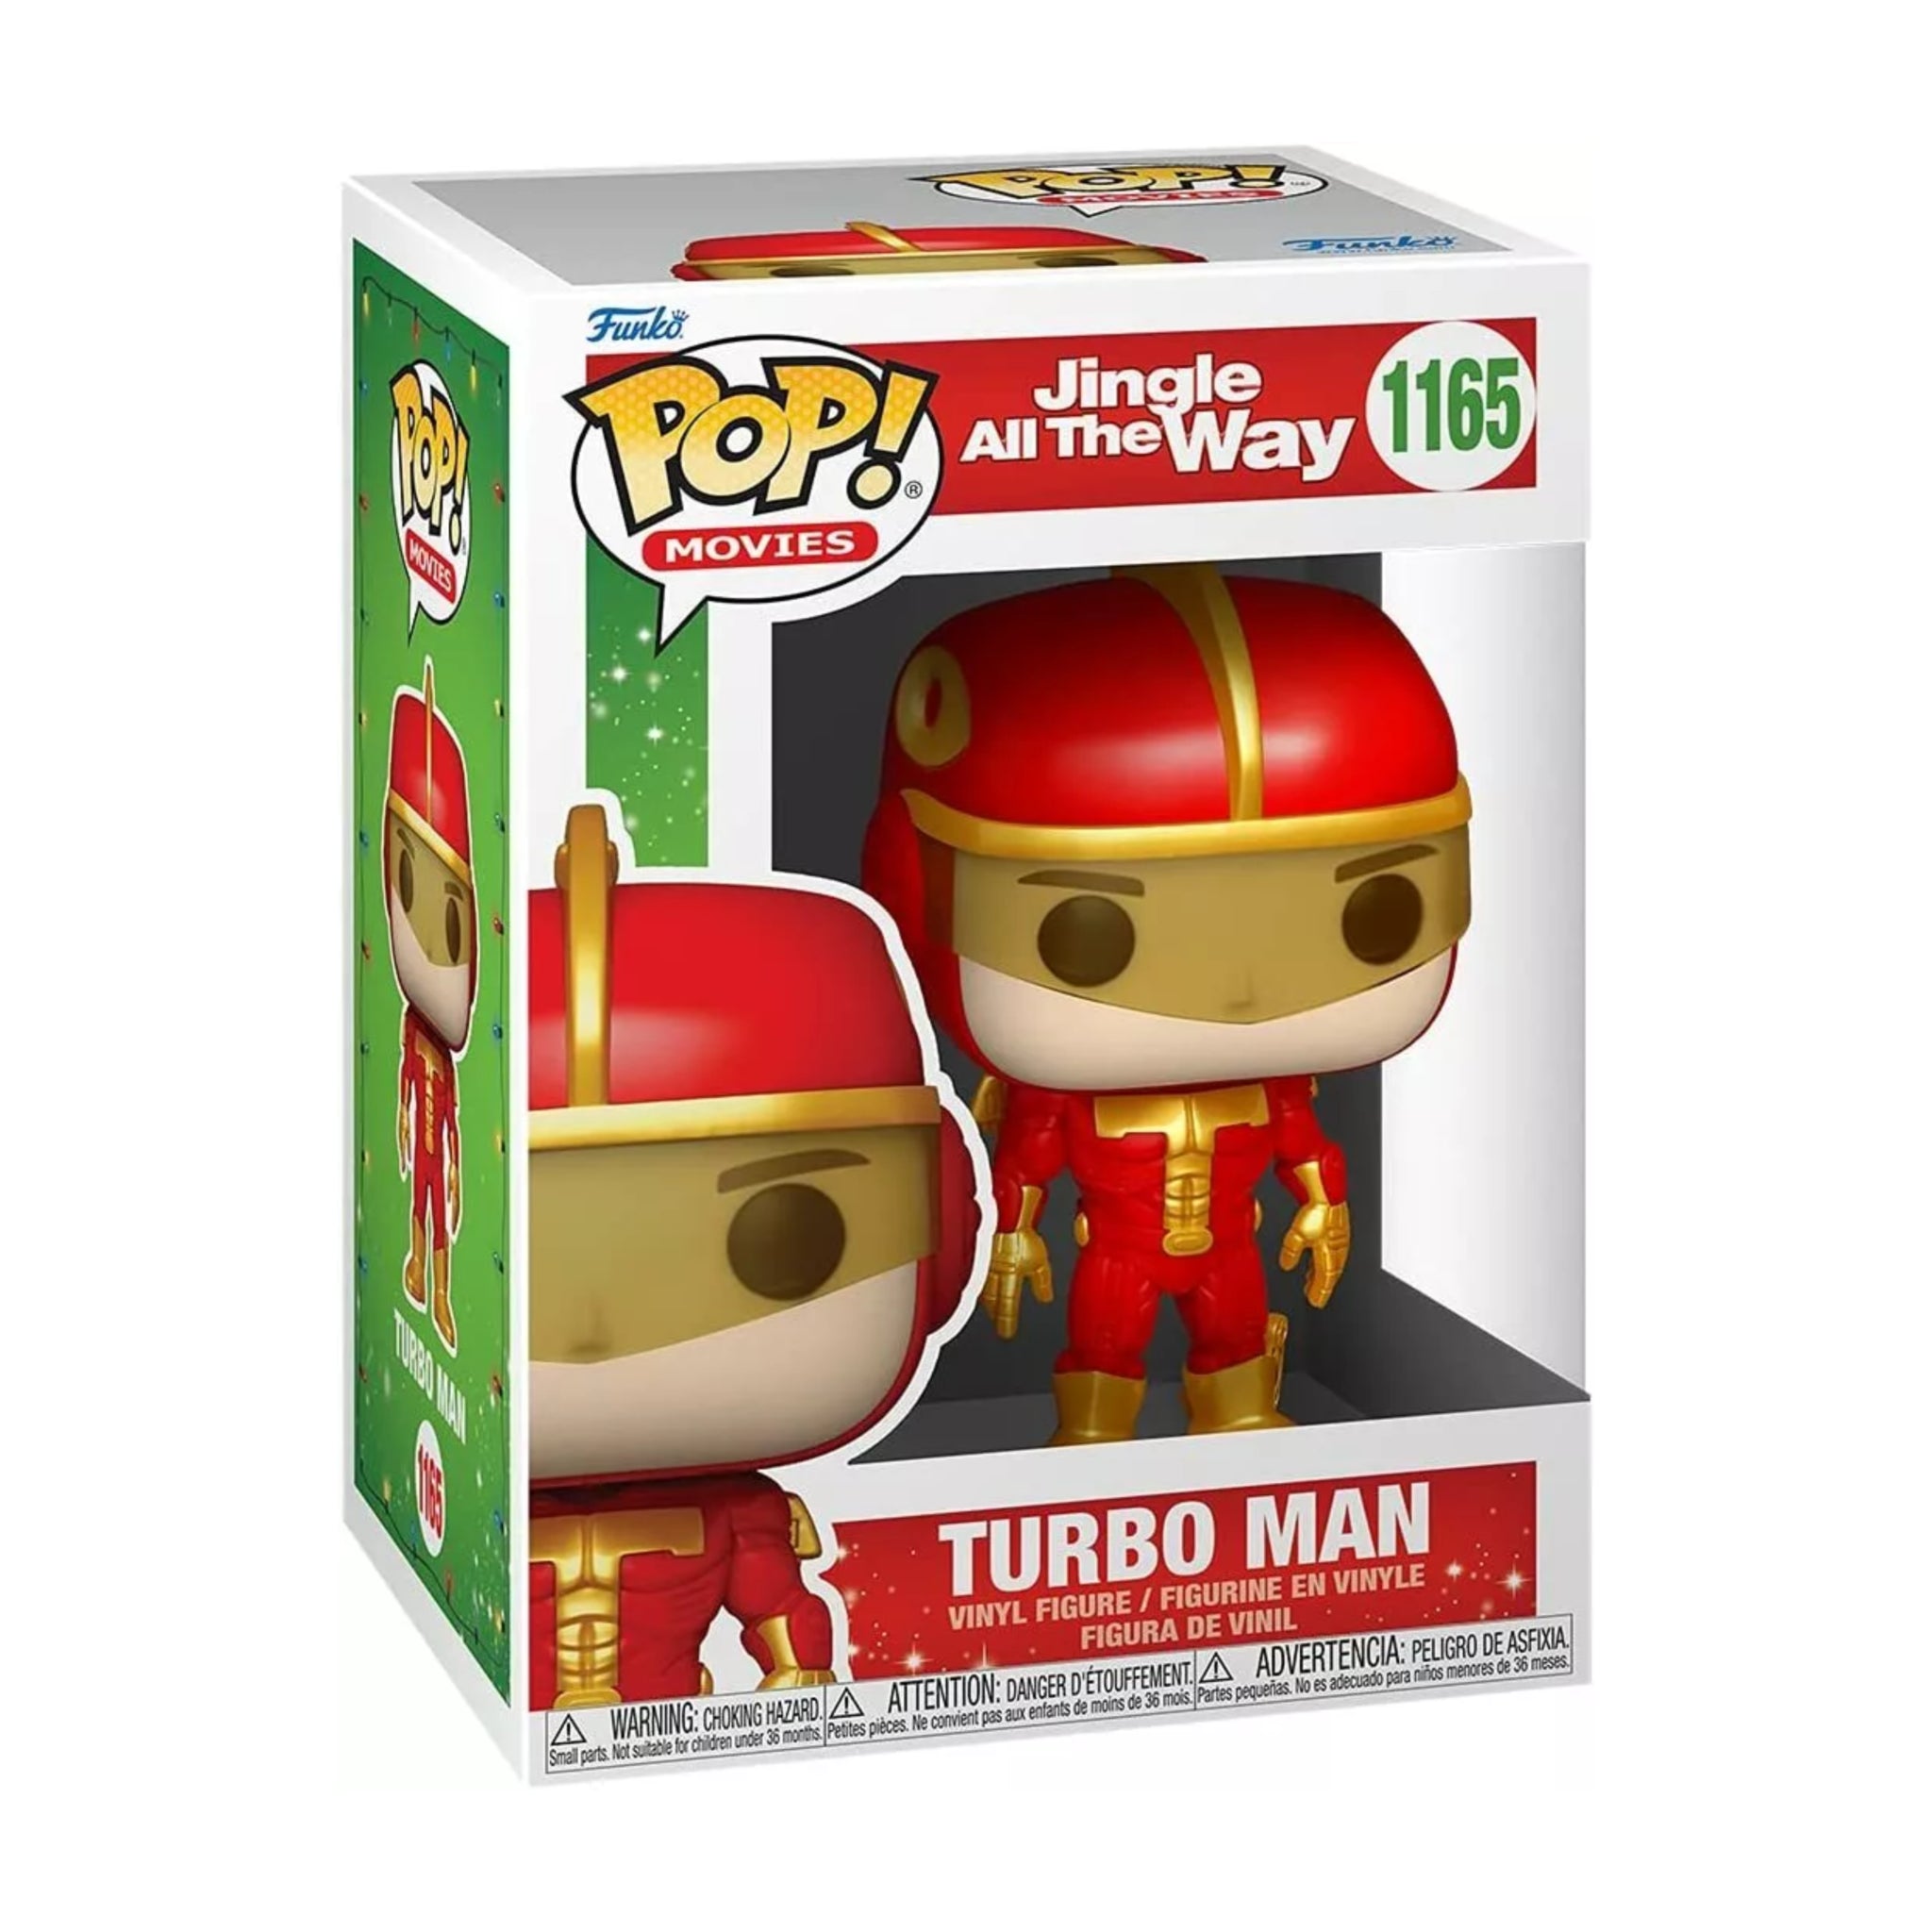 Turbo Man Funko Pop!